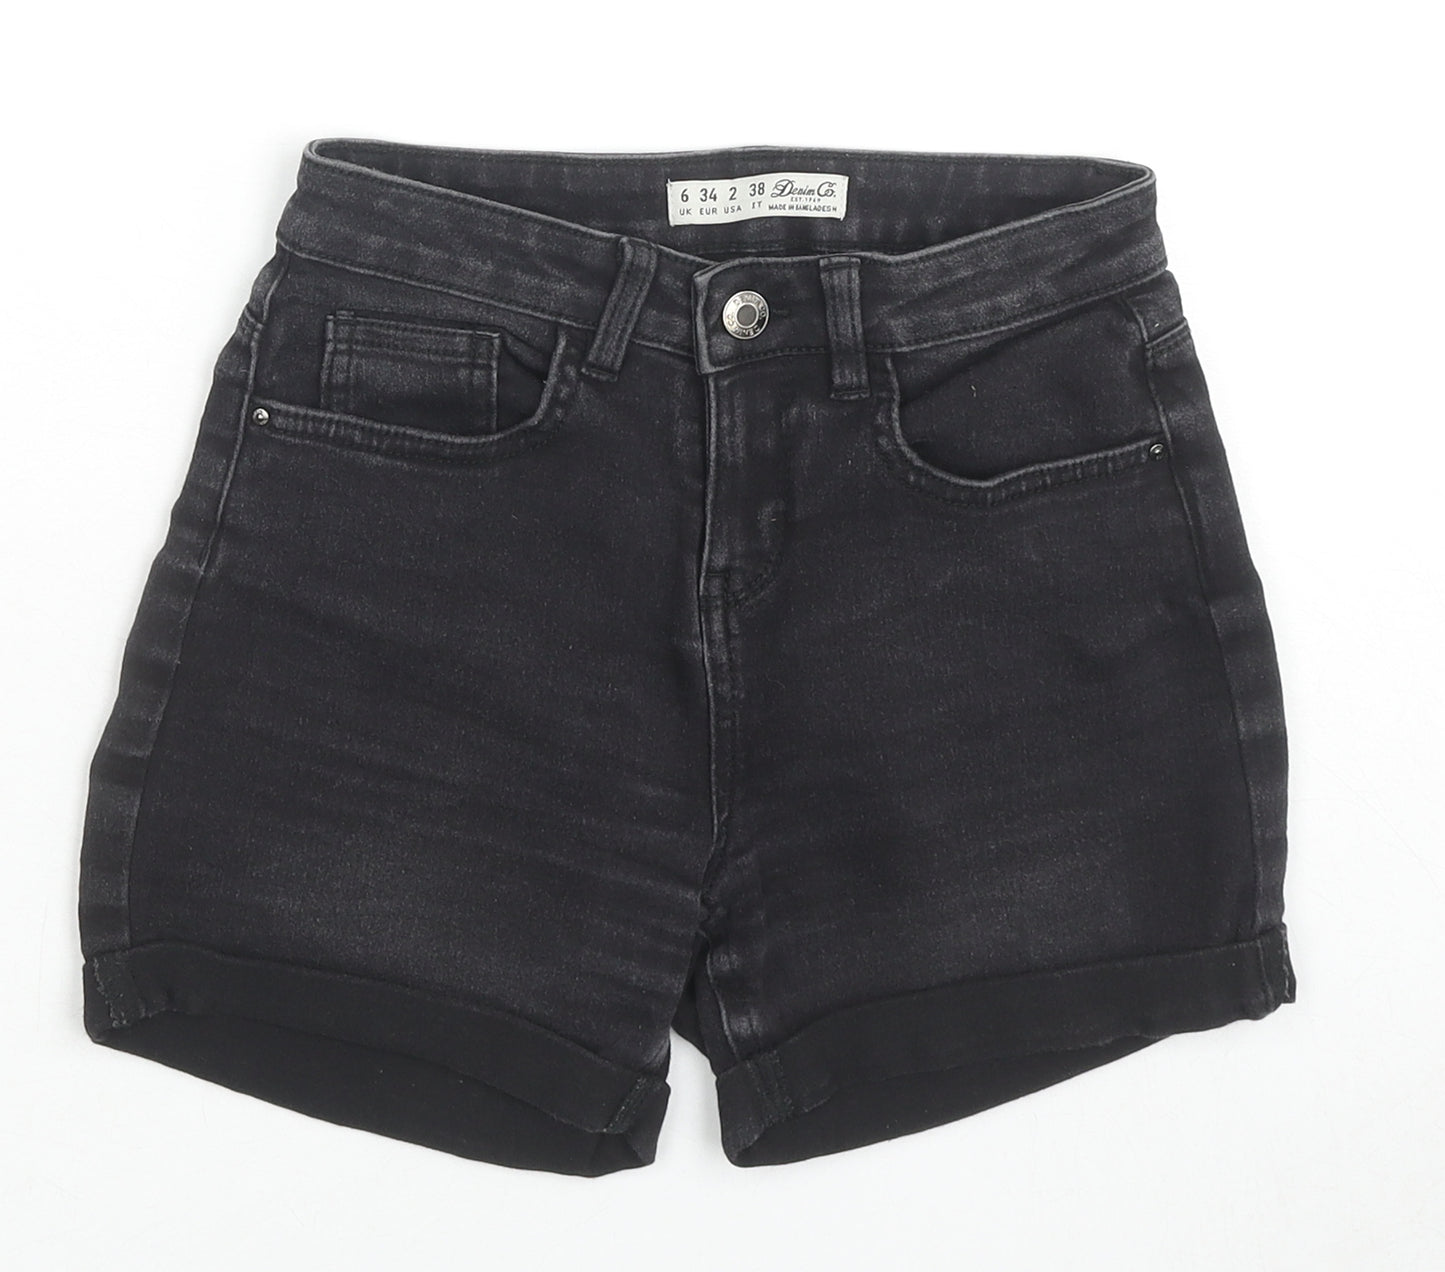 Denim & Co. Womens Black Cotton Hot Pants Shorts Size 6 L3 in Regular Zip